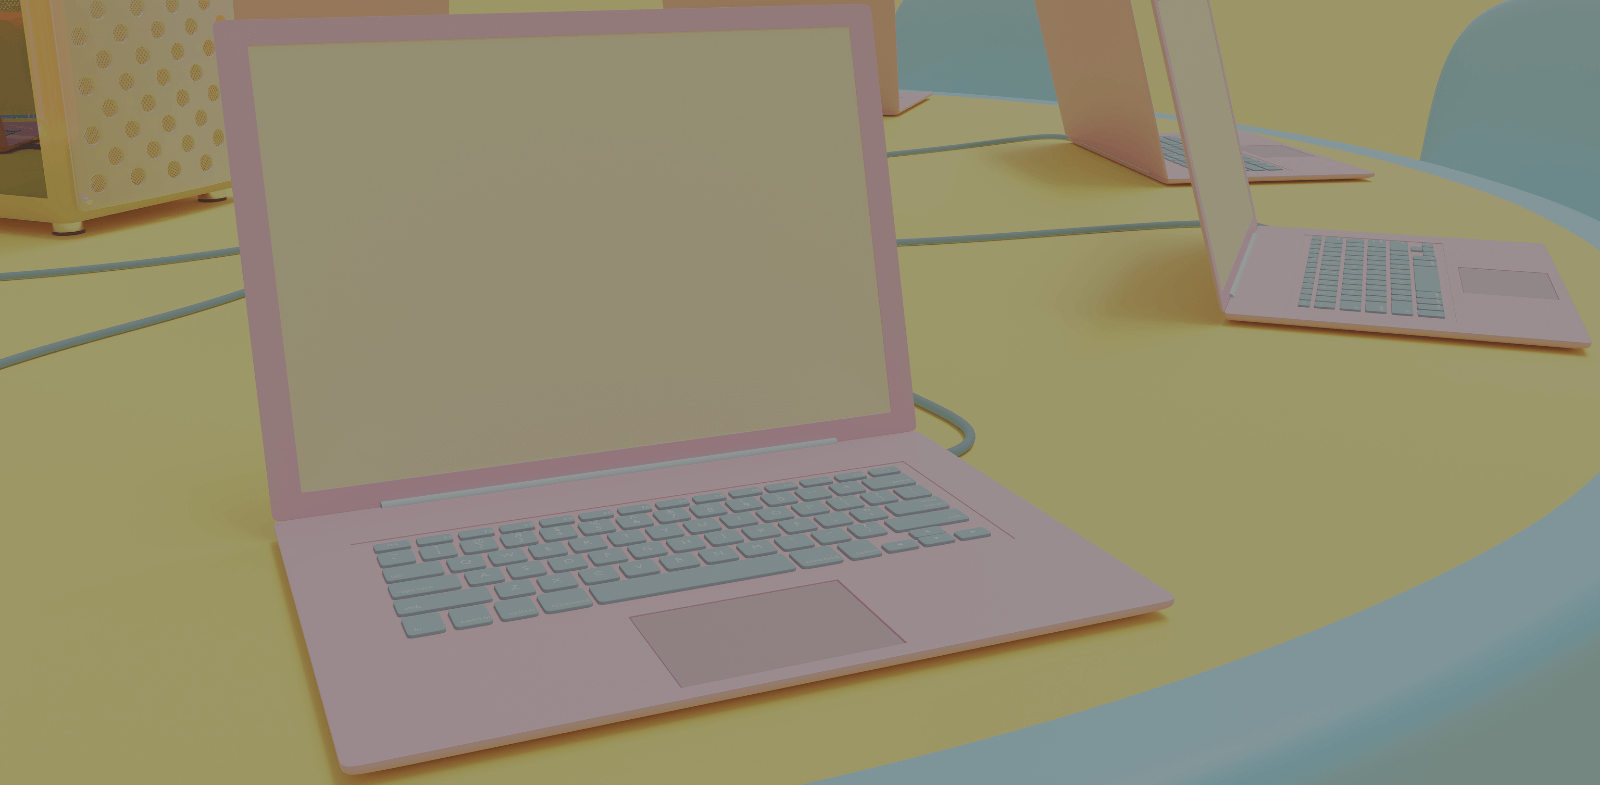 pink laptop on yellow desk